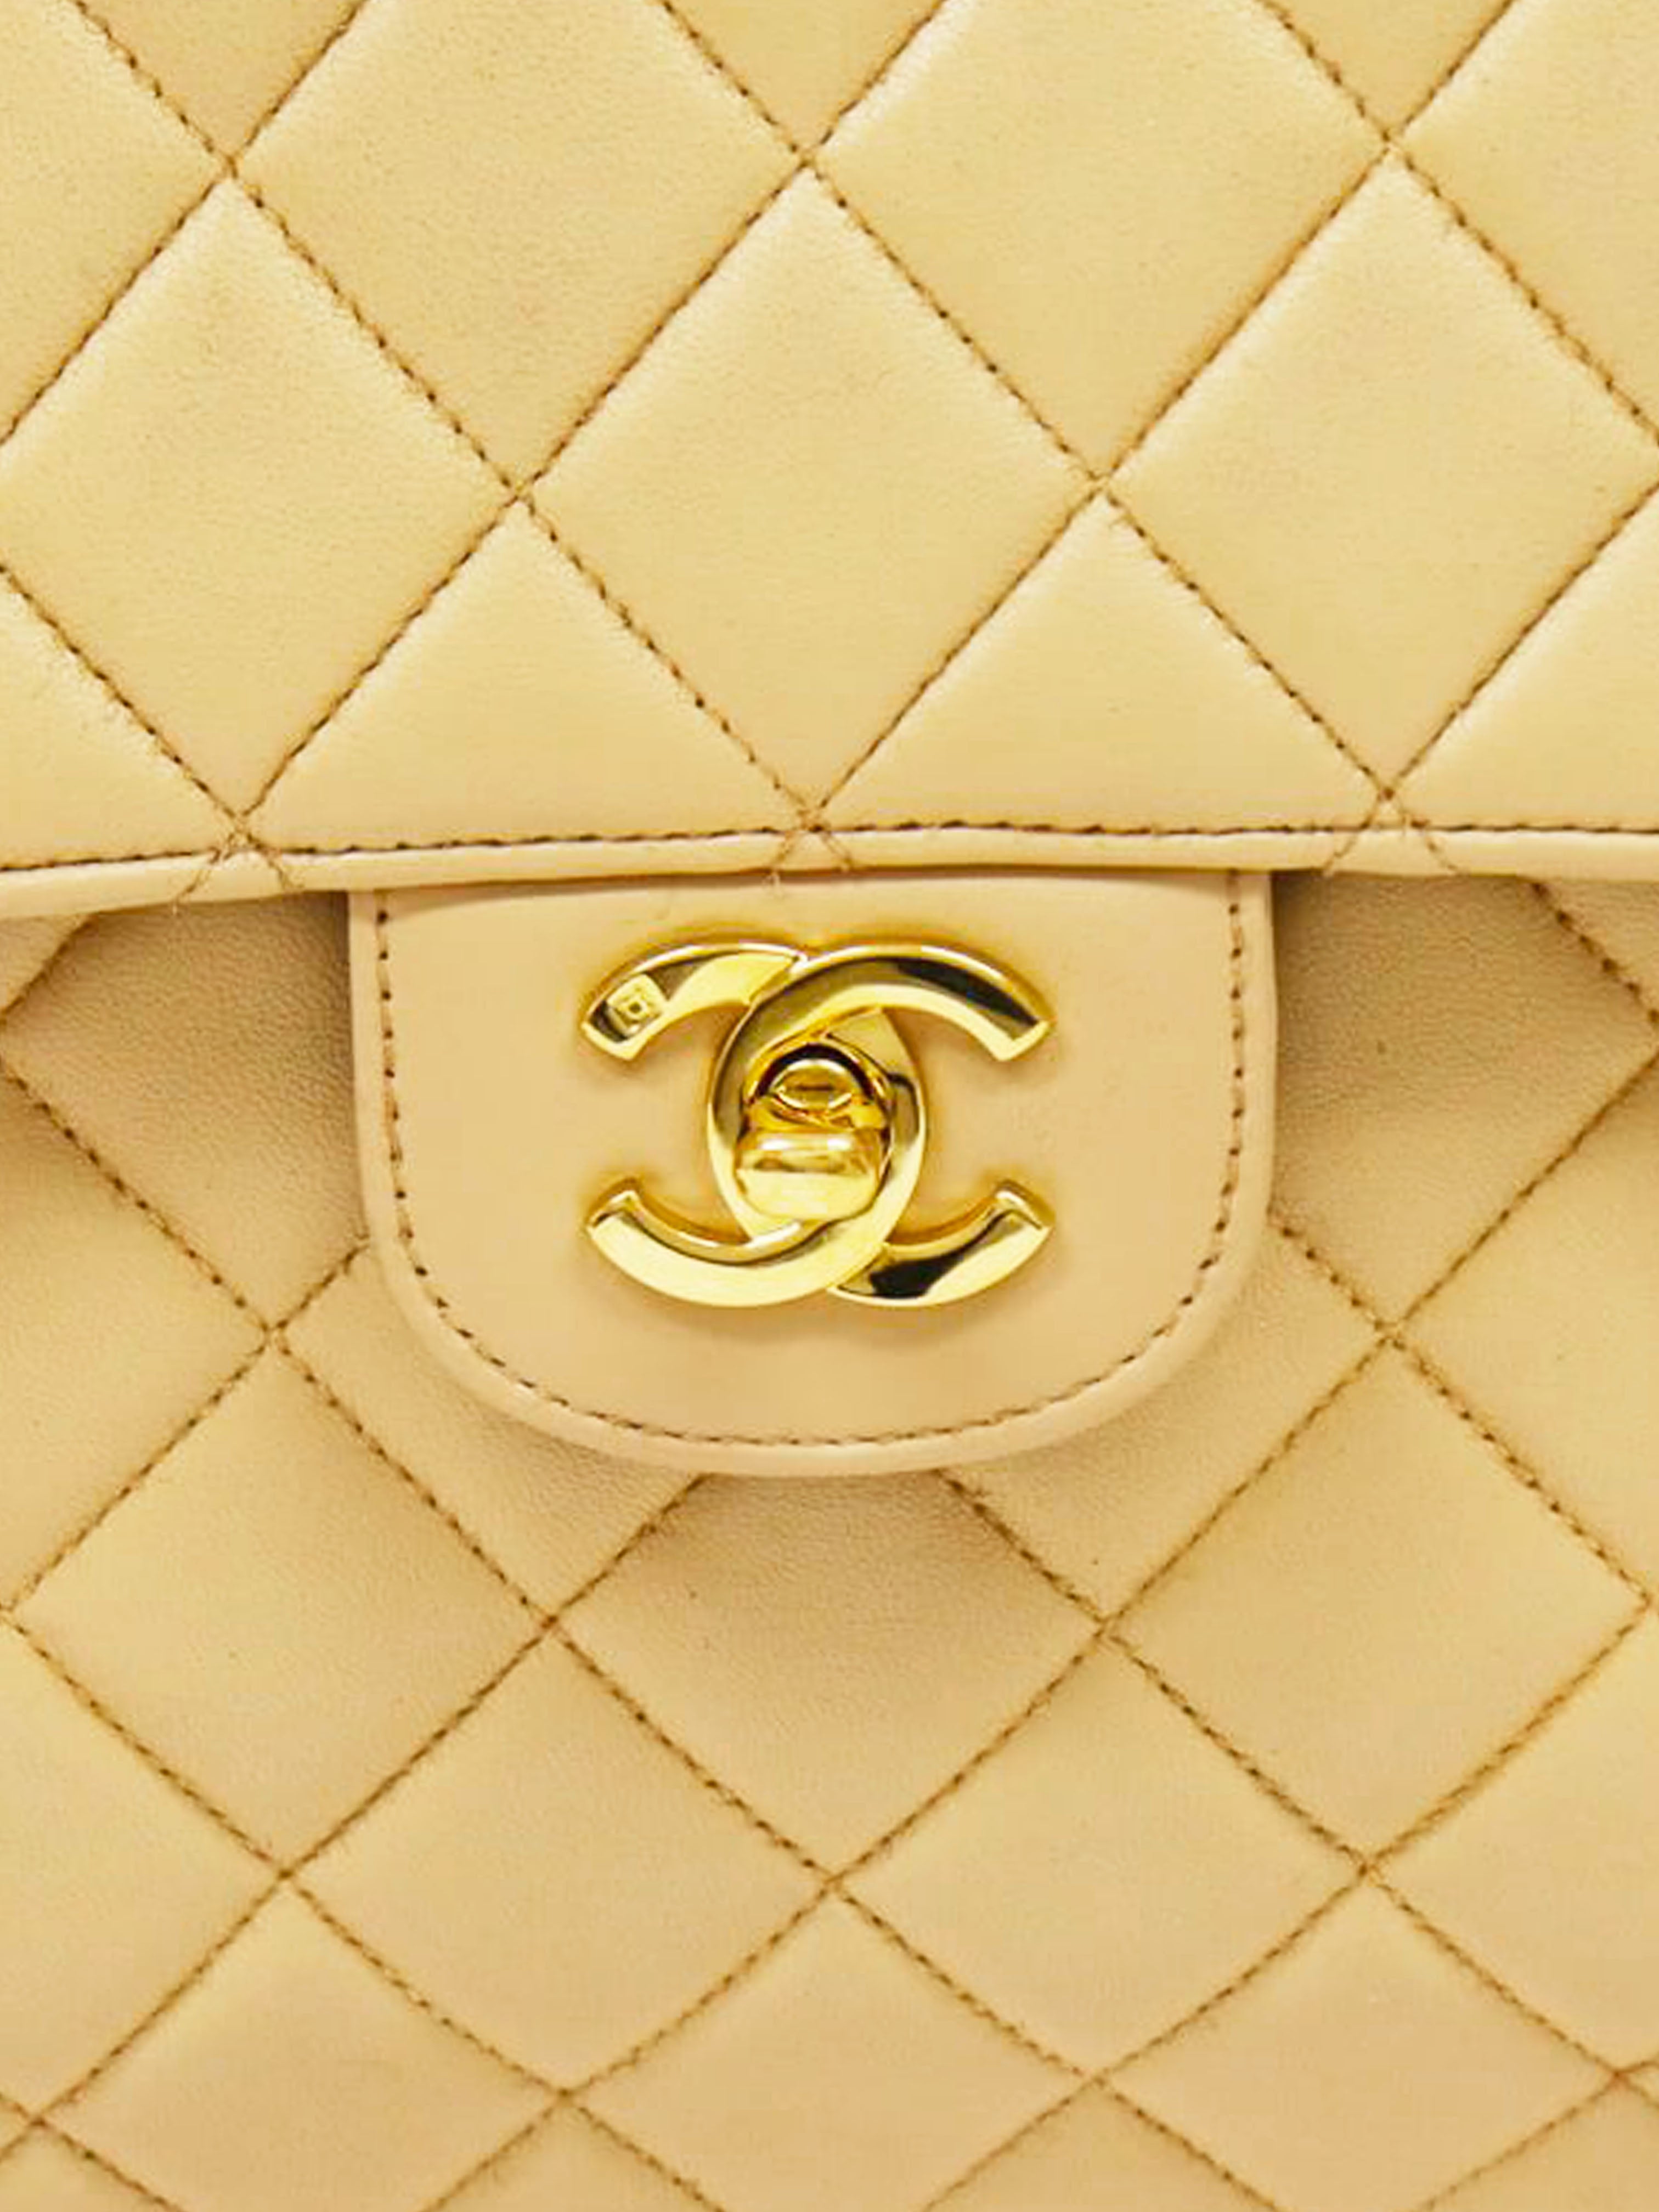 Vintage 1990’s Chanel CC Gold Leather Chain Mini Crossbody Bag